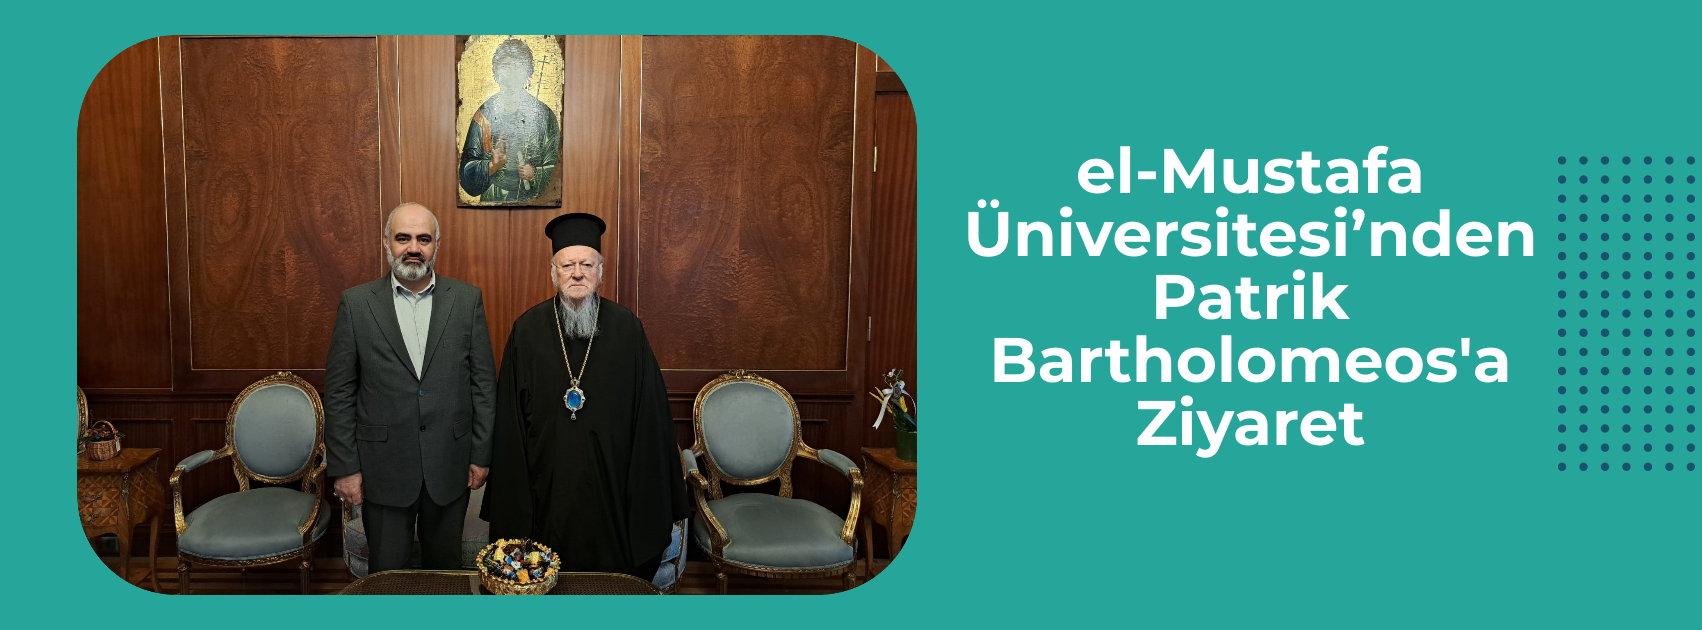 el-Mustafa Üniversitesinden Patrik Bartholomeos'a Ziyaret